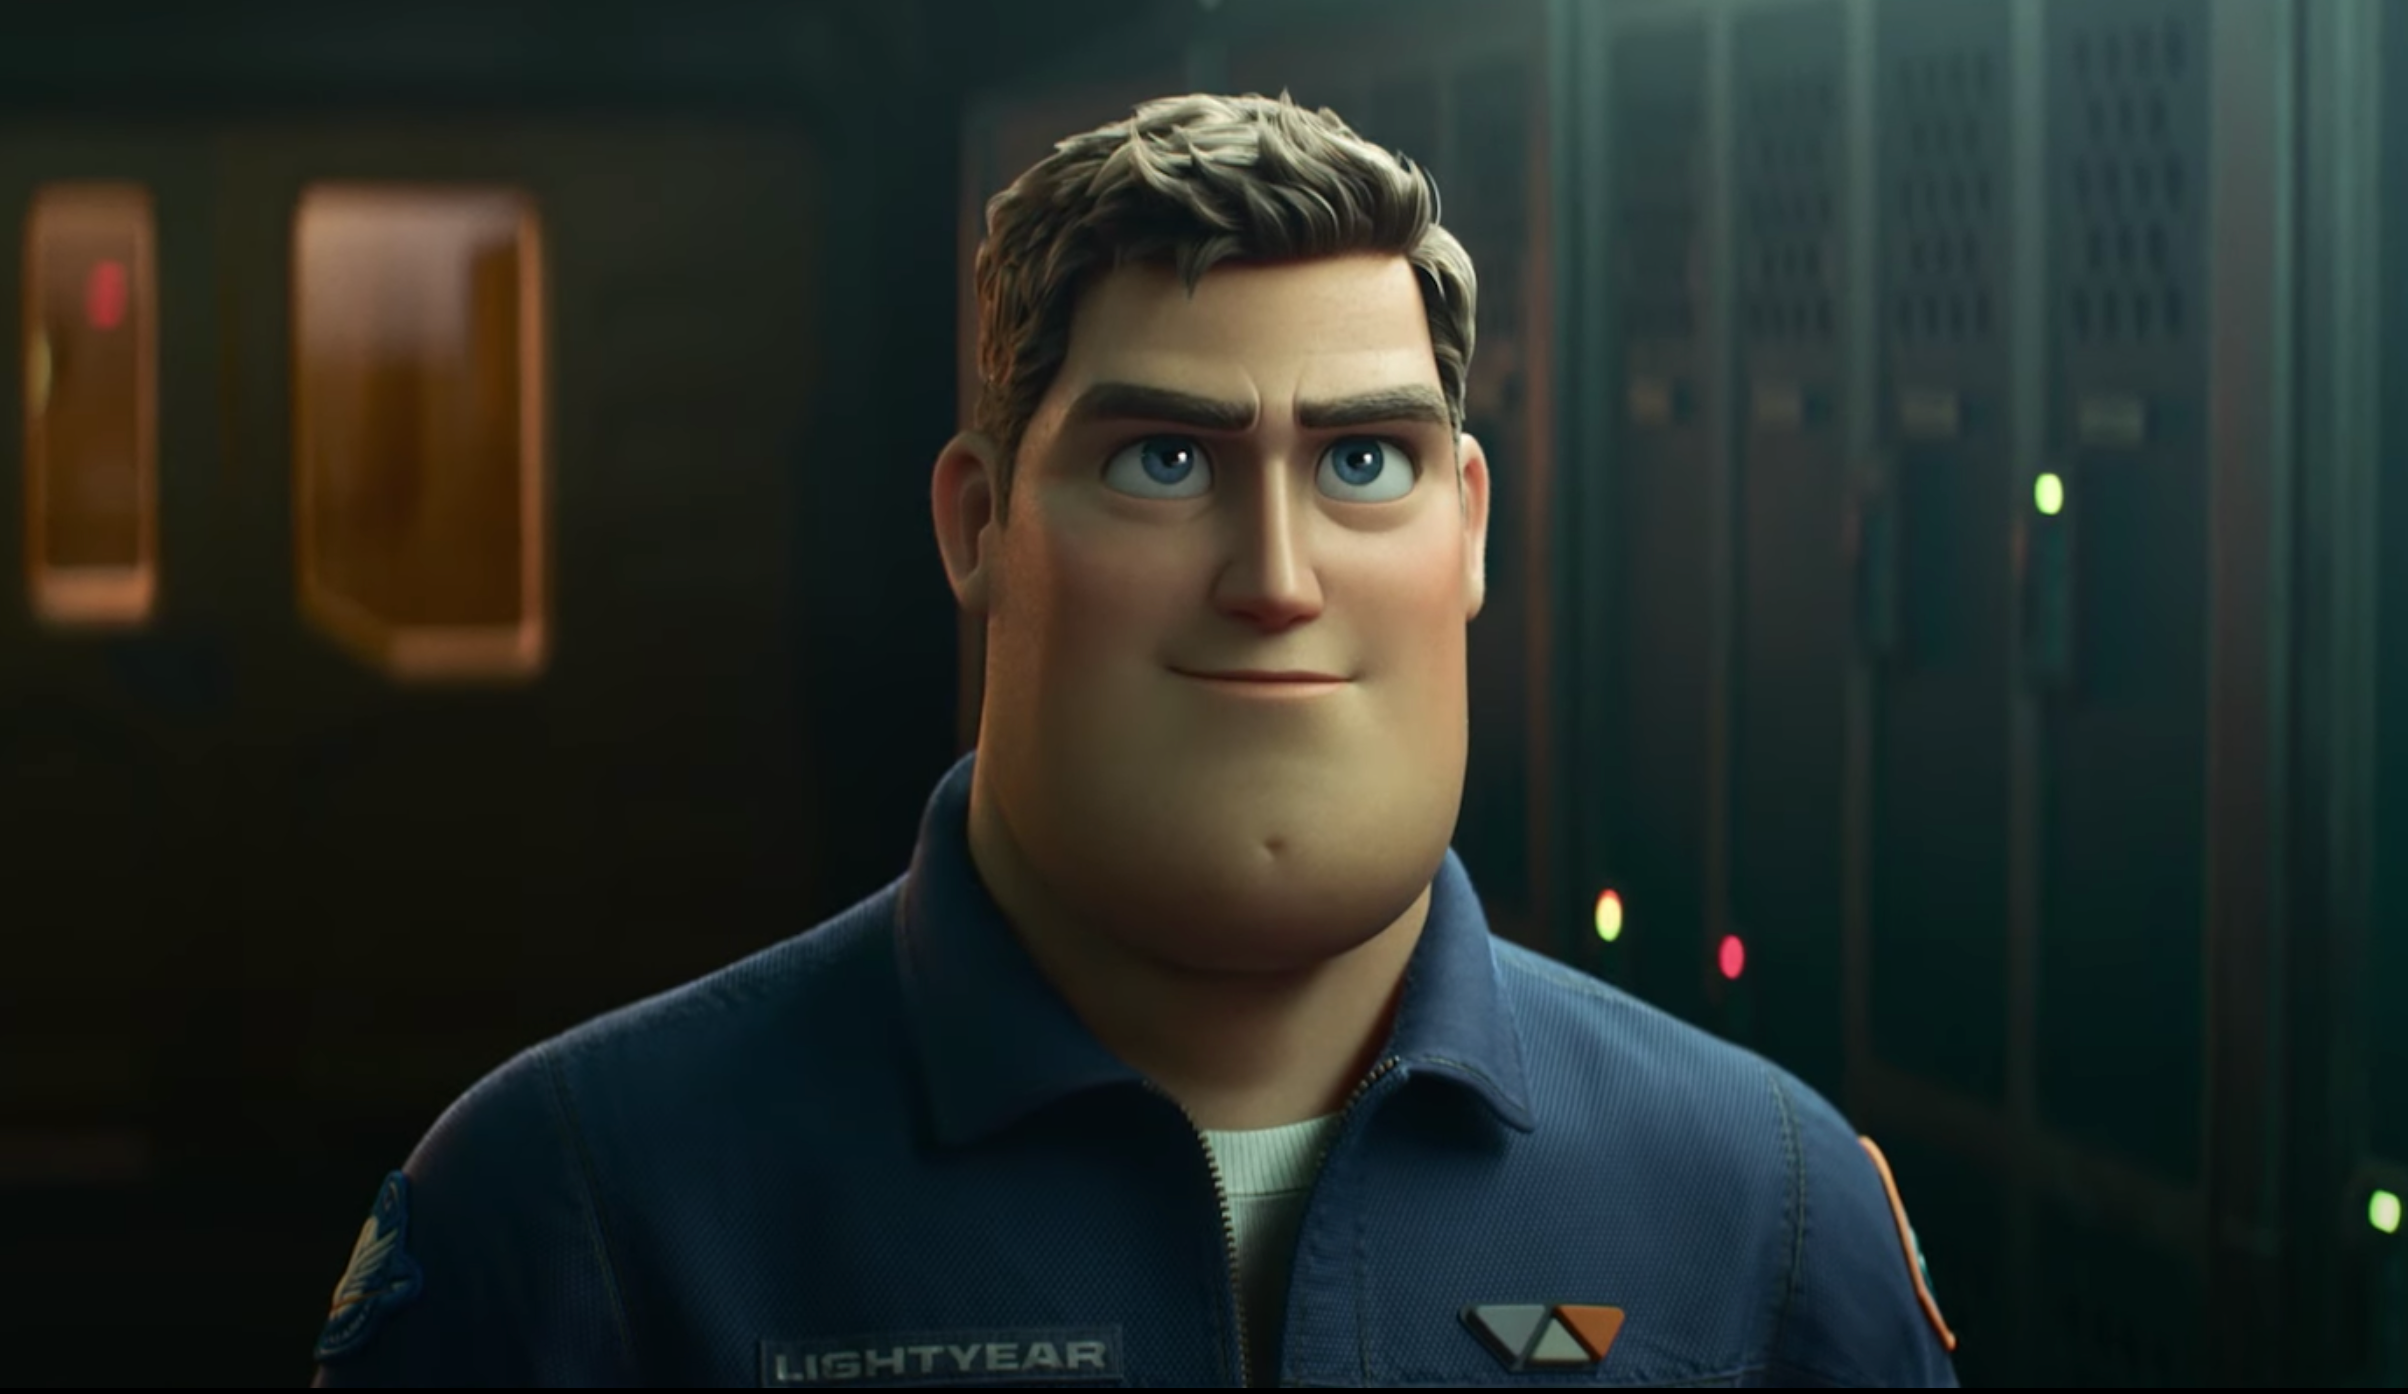 Chris Evans is going to play Buzz in Pixar’s Lightyear